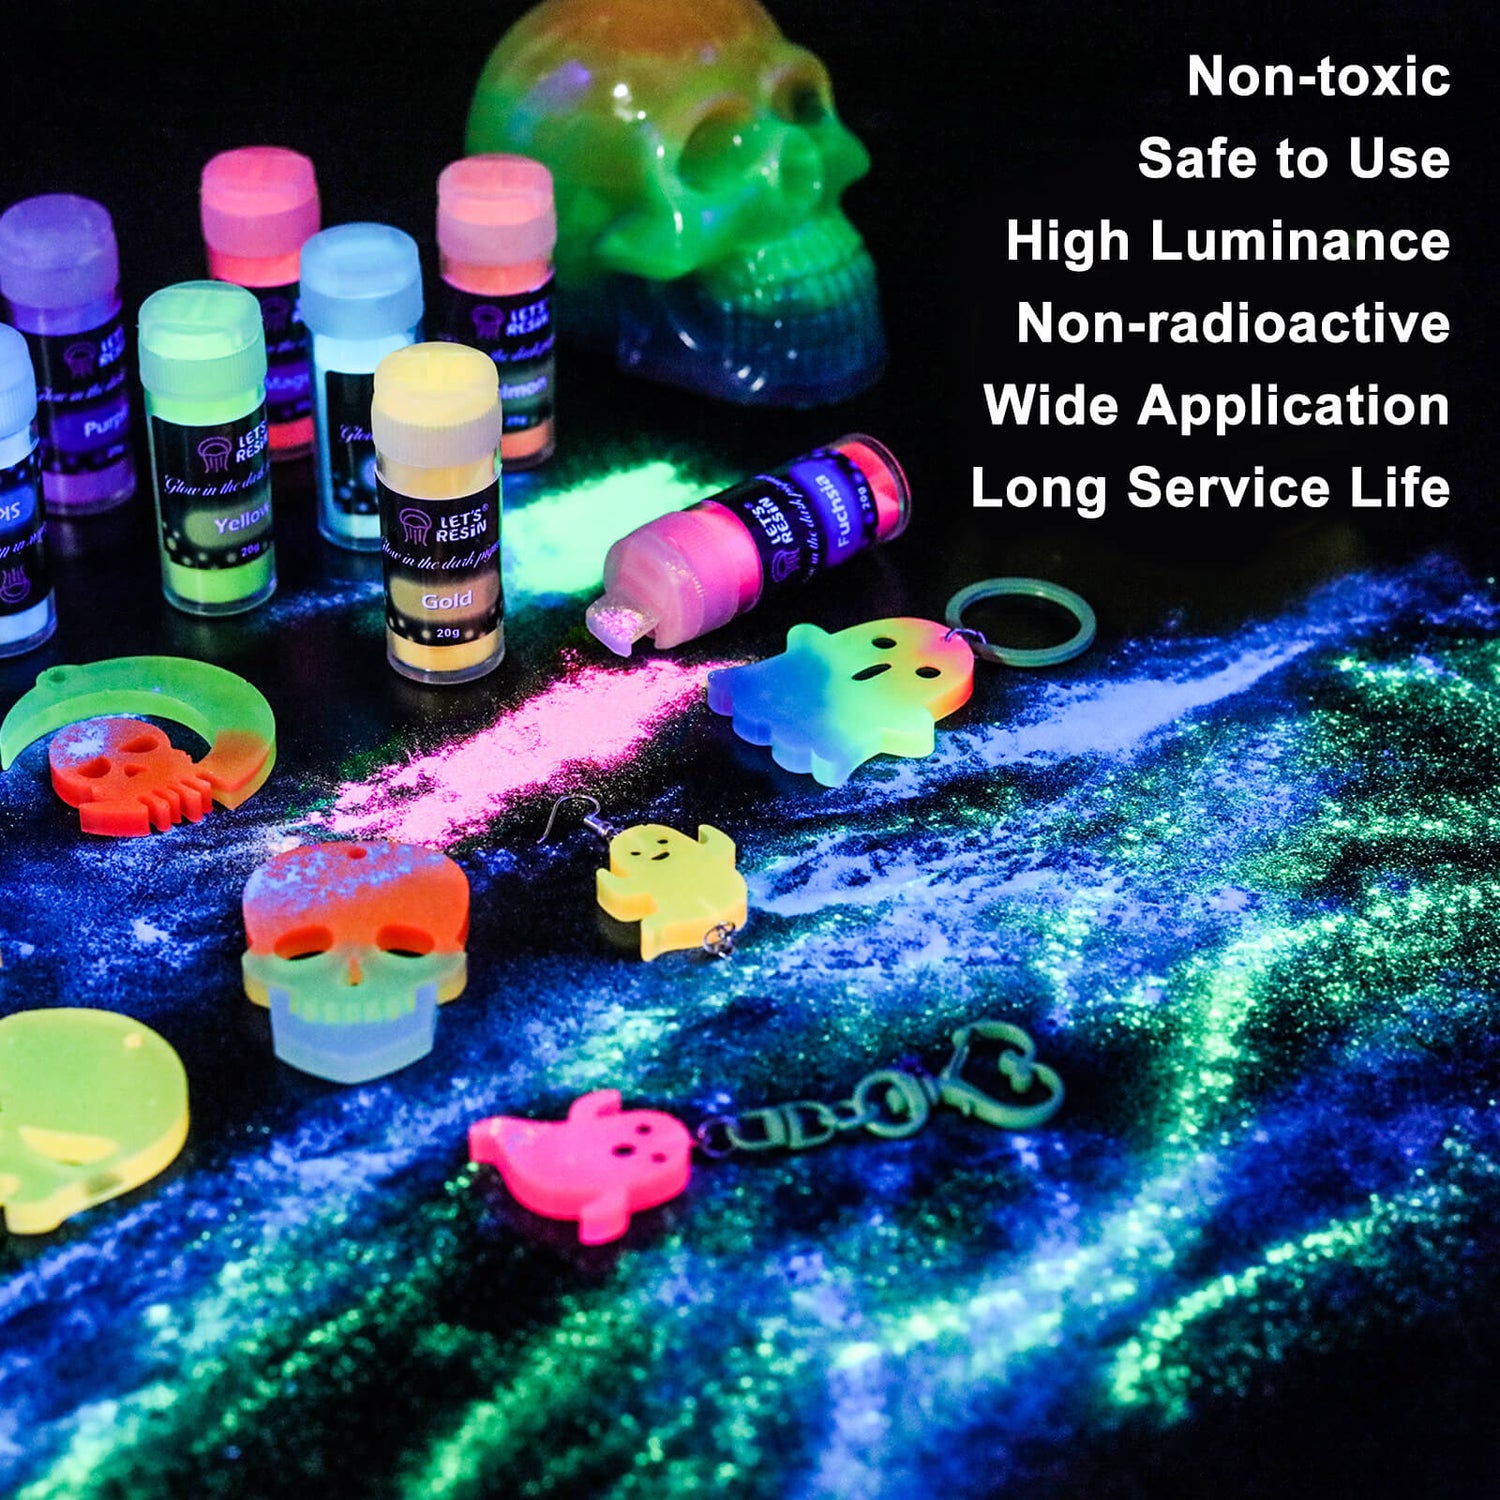 Glow In The Dark Pigment Powder 12 Colors Epoxy Resin Dye